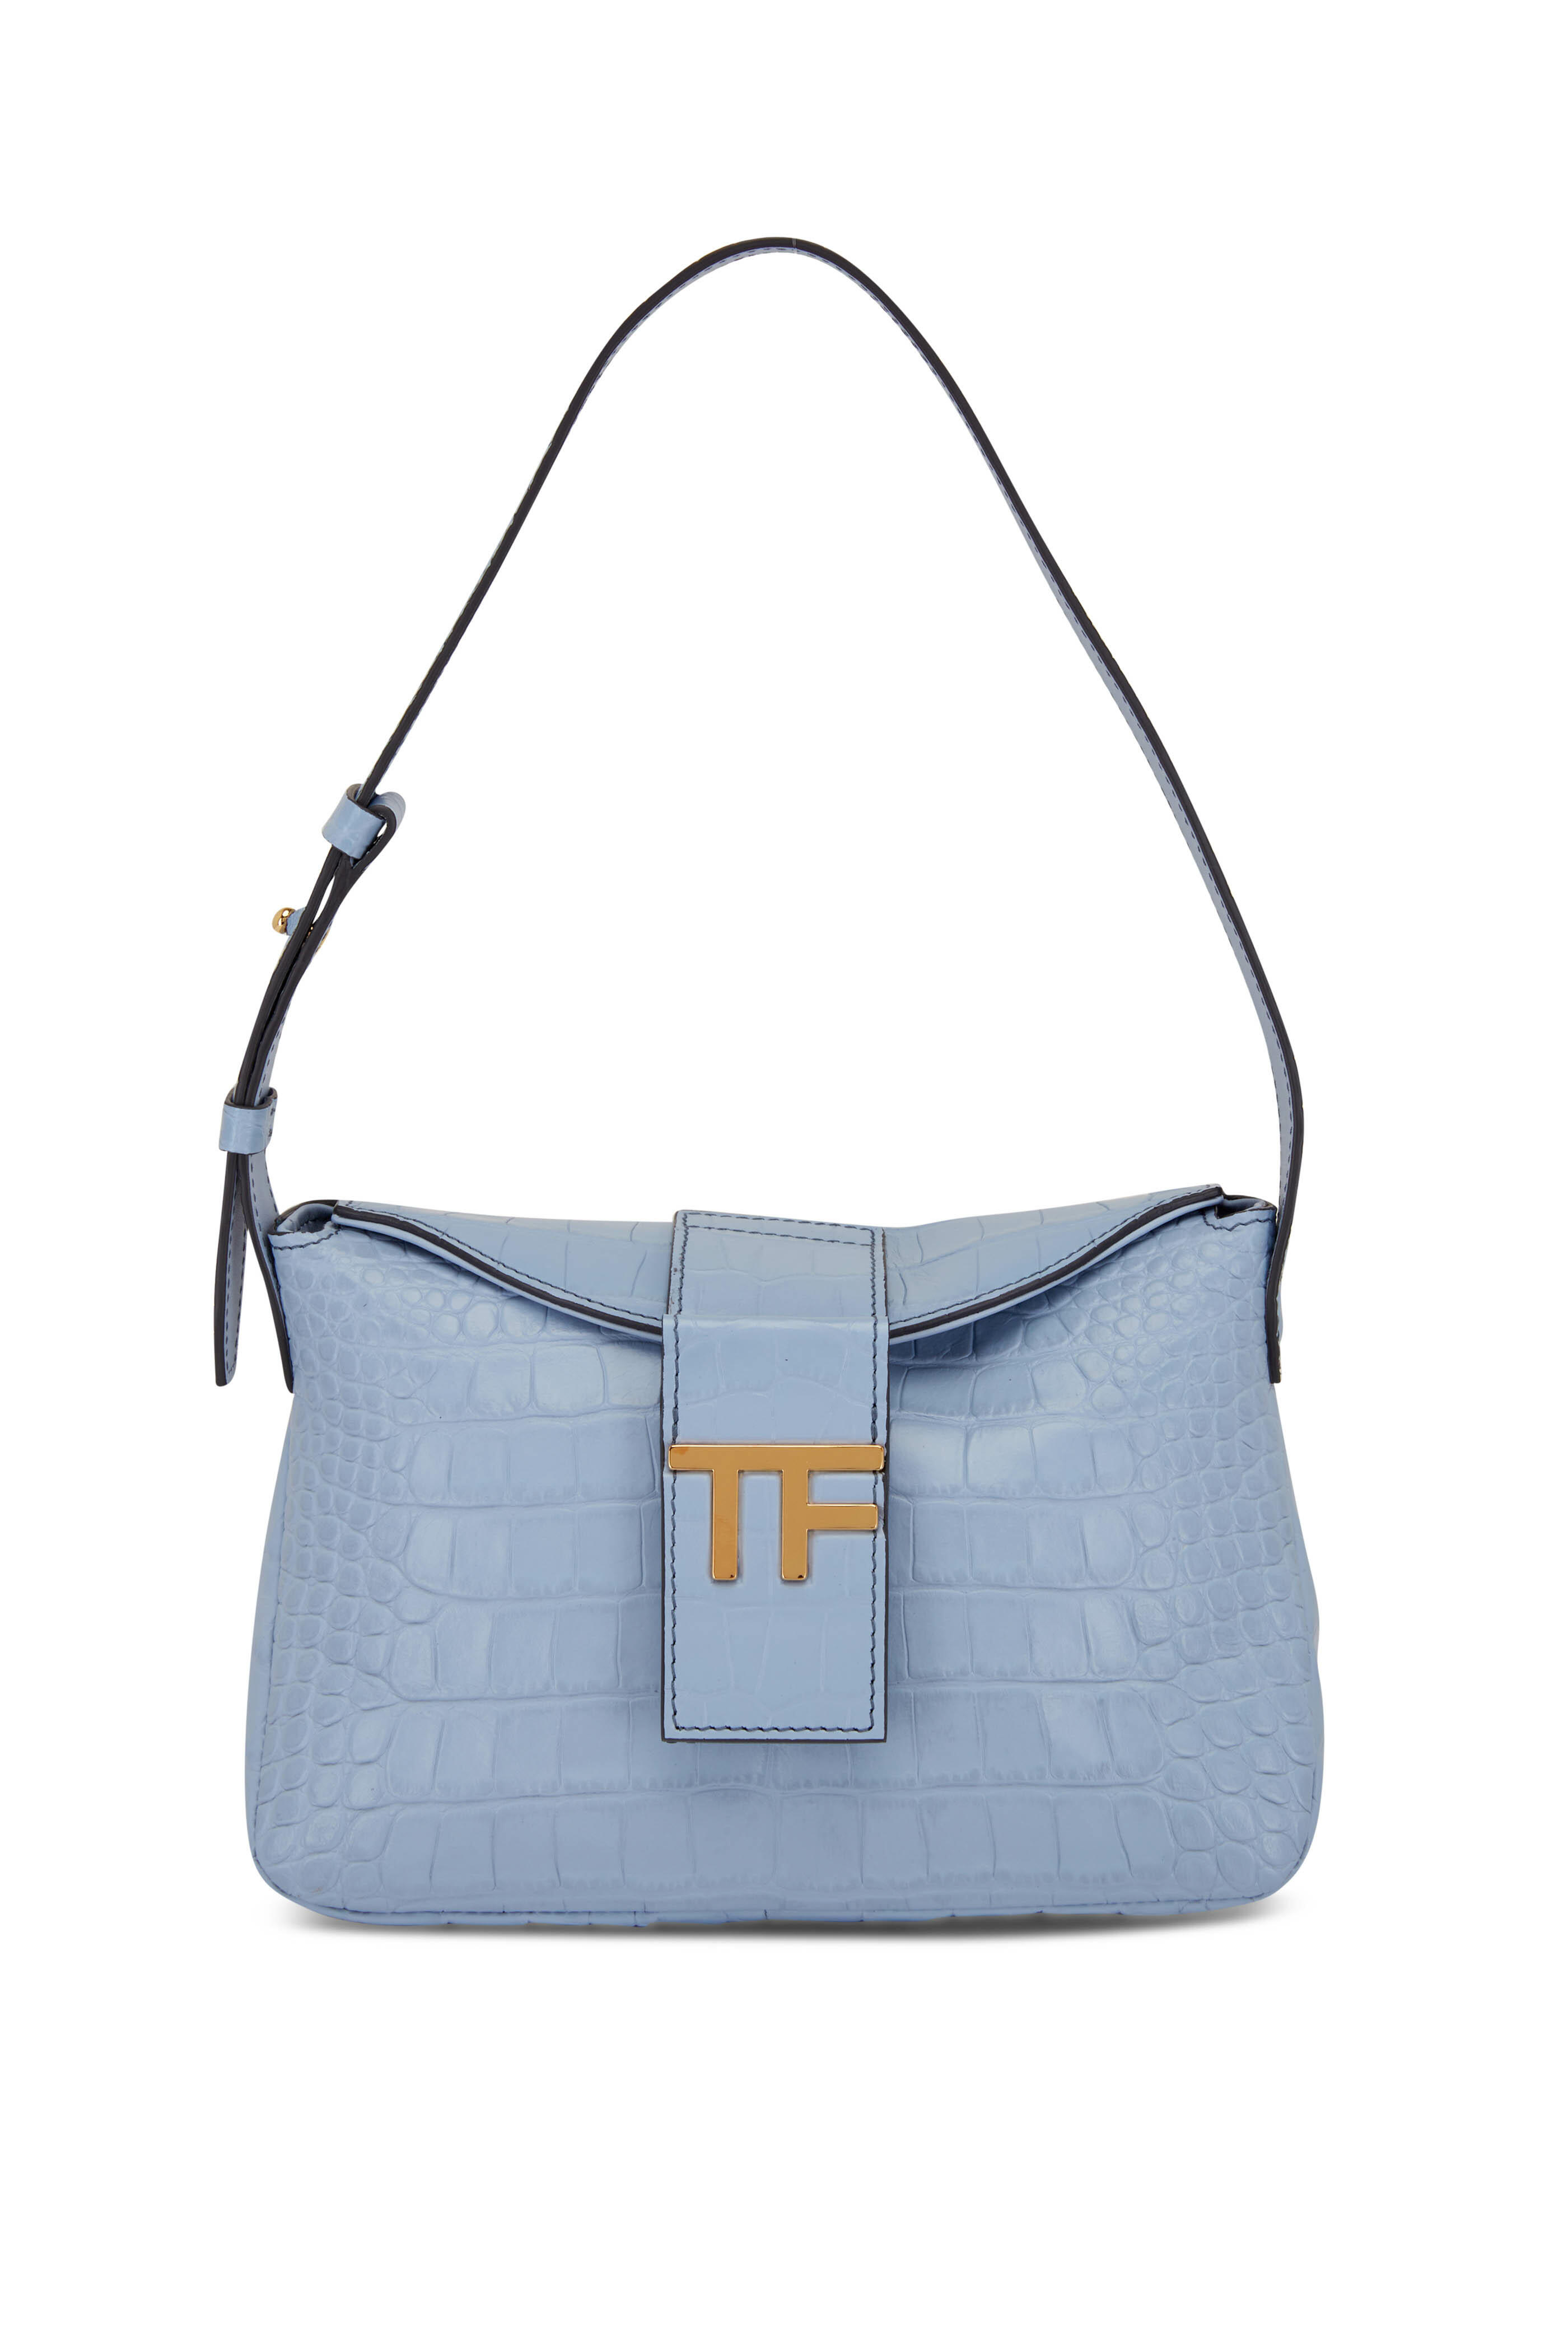 Fendi Baguette Sky Blue Leather Crossbody Belt Bag